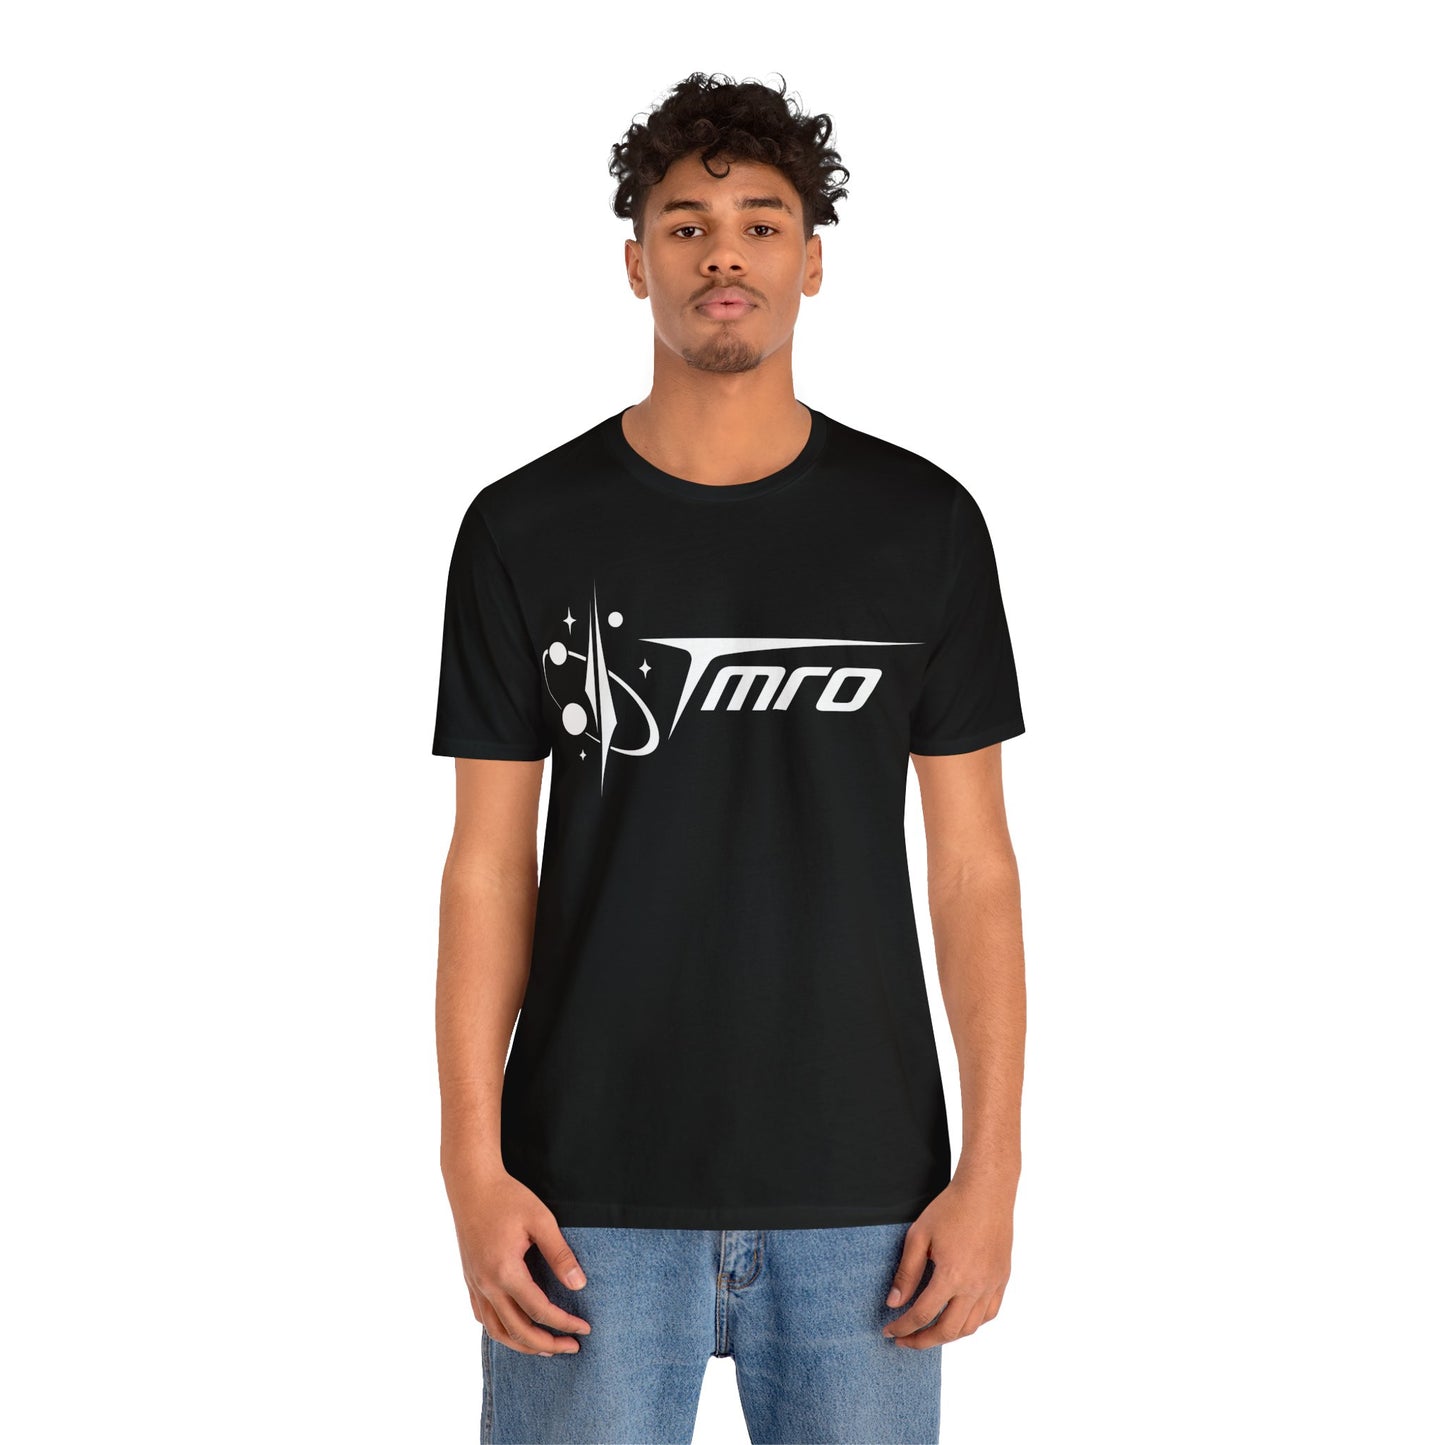 TMRO - White Logo - T-shirt - US